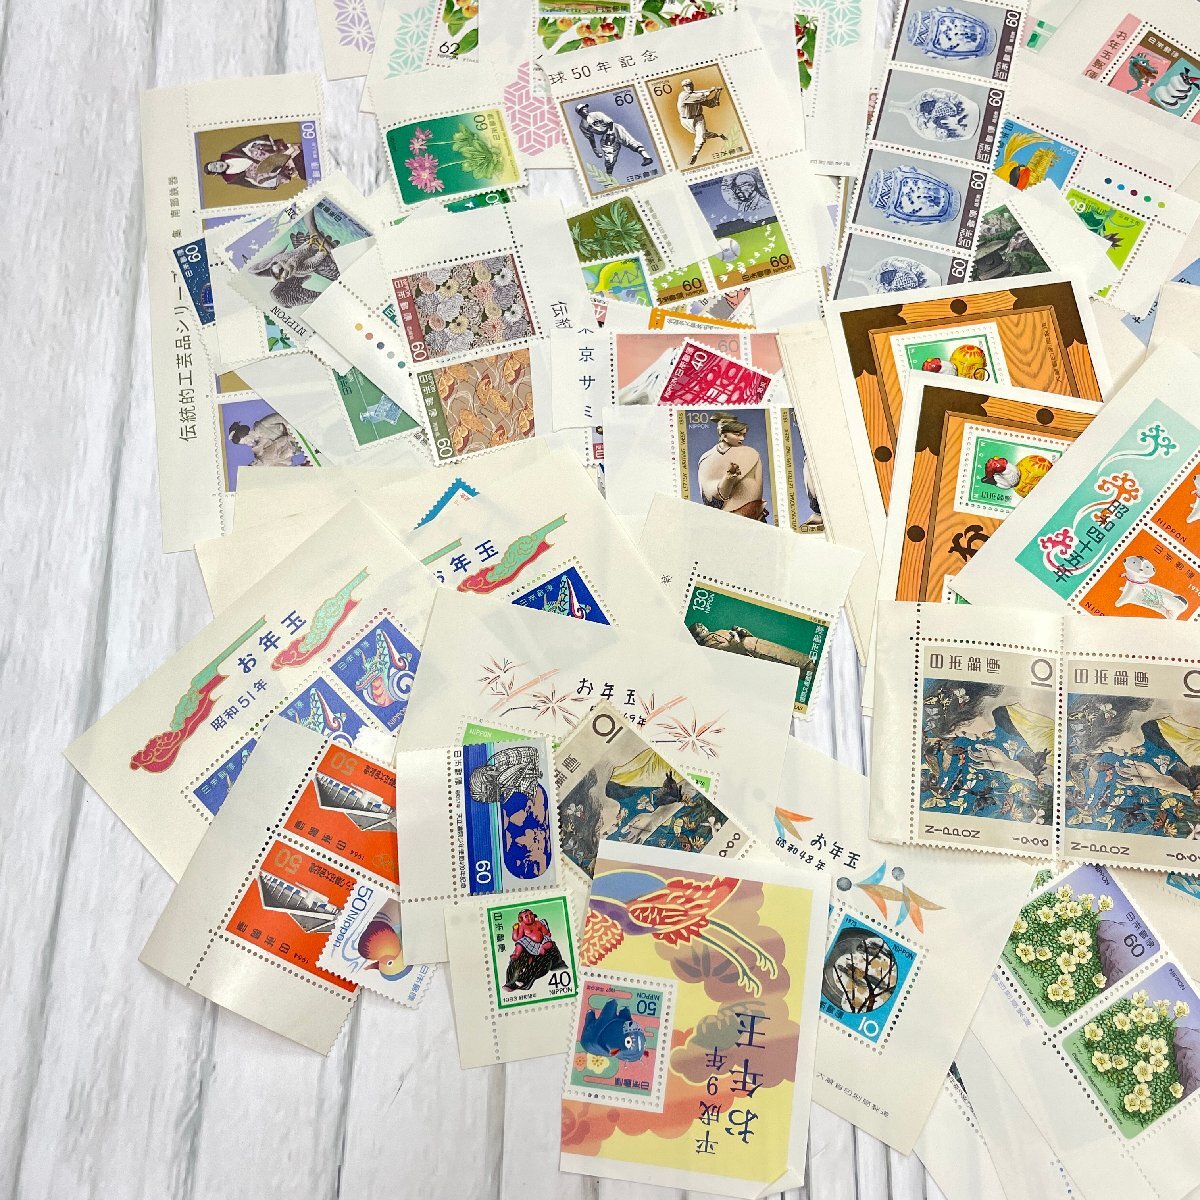 m002 H8 3 送料無料 未使用 バラ 切手 1万円分 額面10,000円分 まとめて 日本切手 郵便 記念切手の画像4